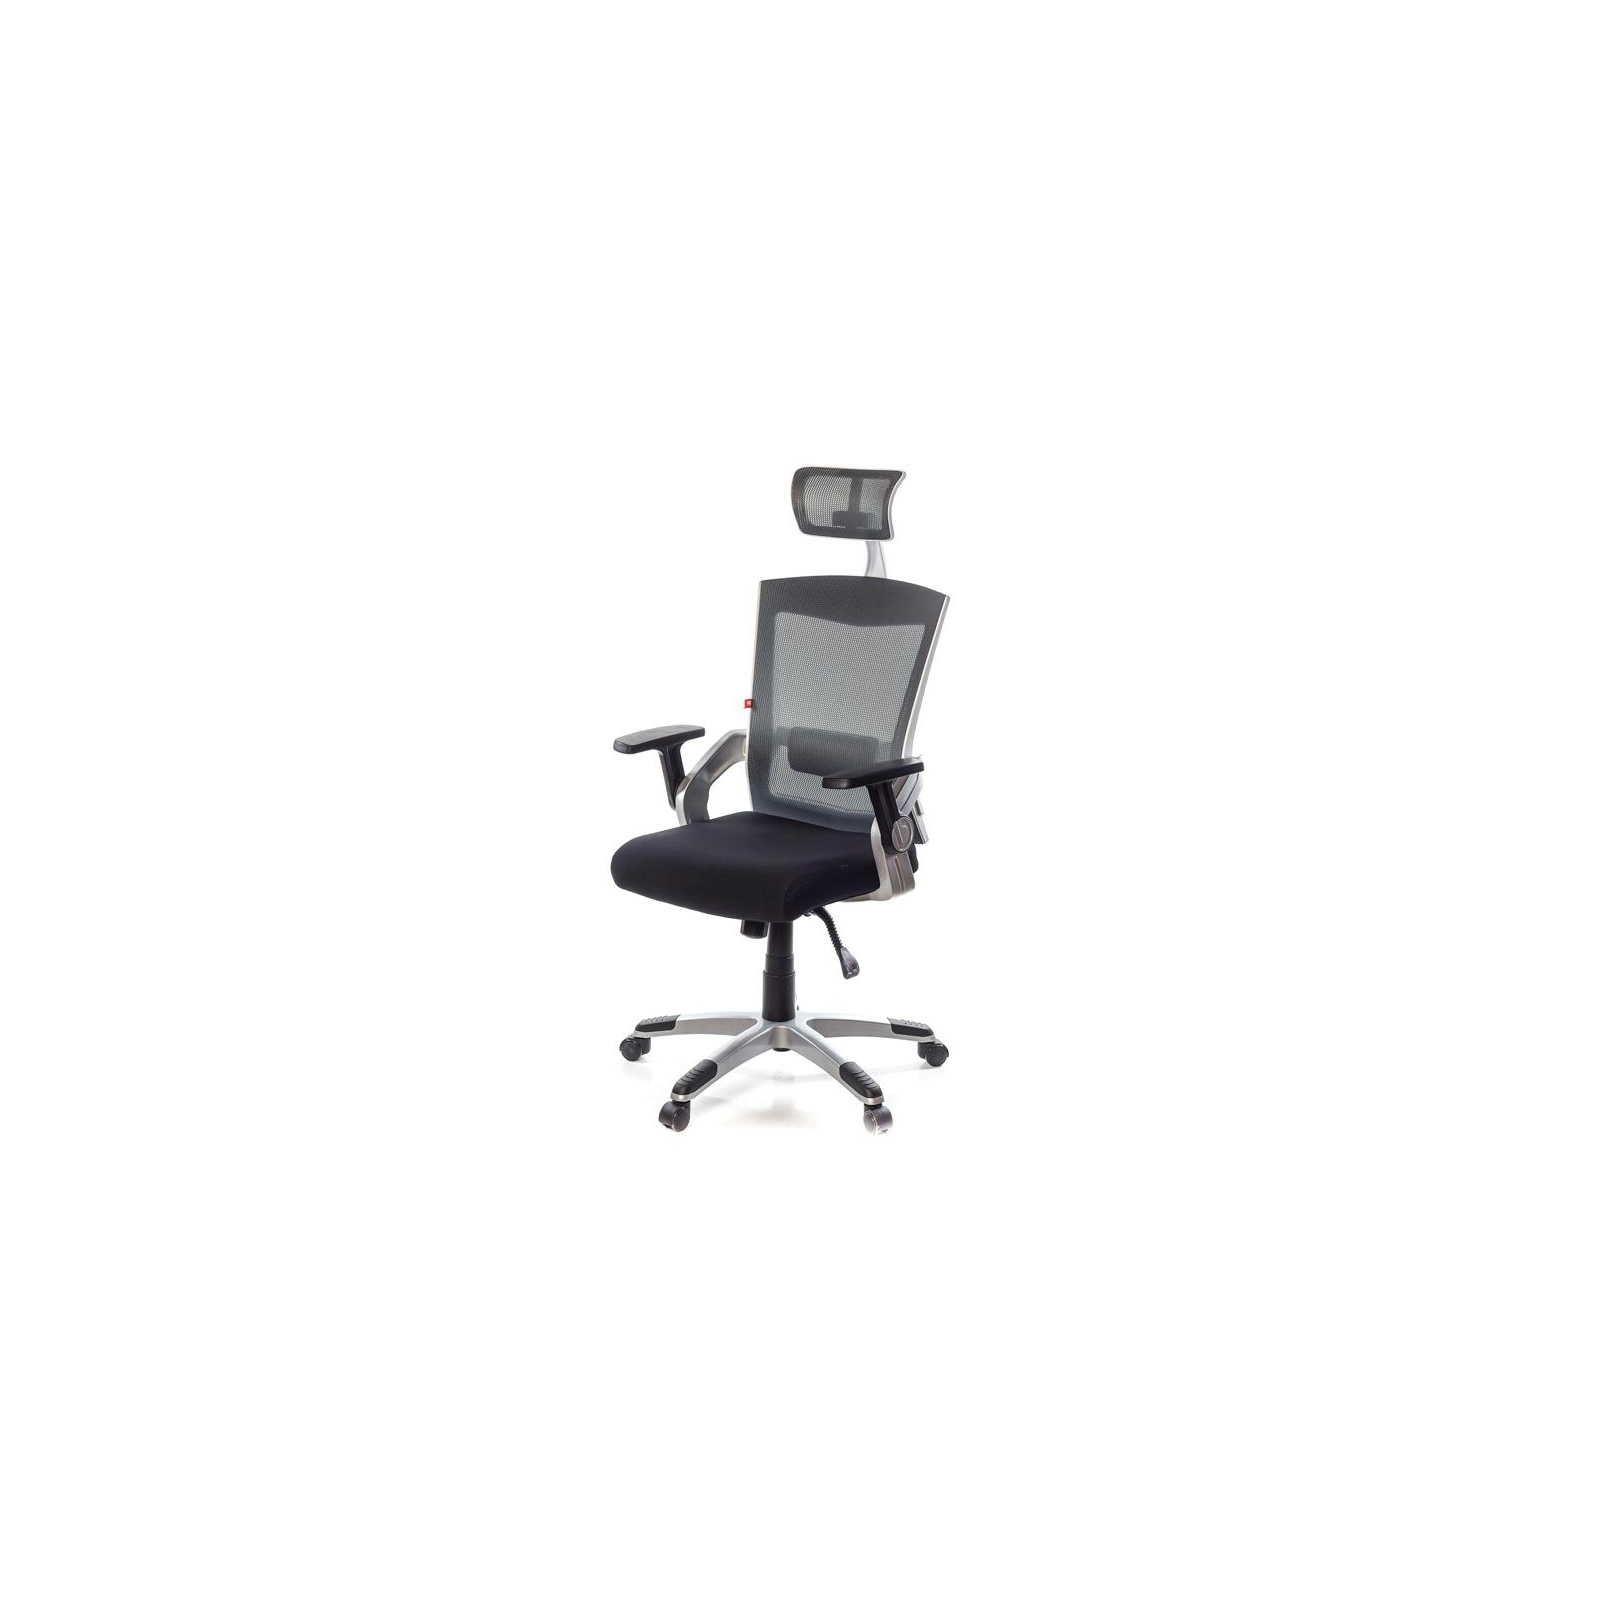 Офісне крісло Аклас Прима PL HR ANF Бордовое (10480)